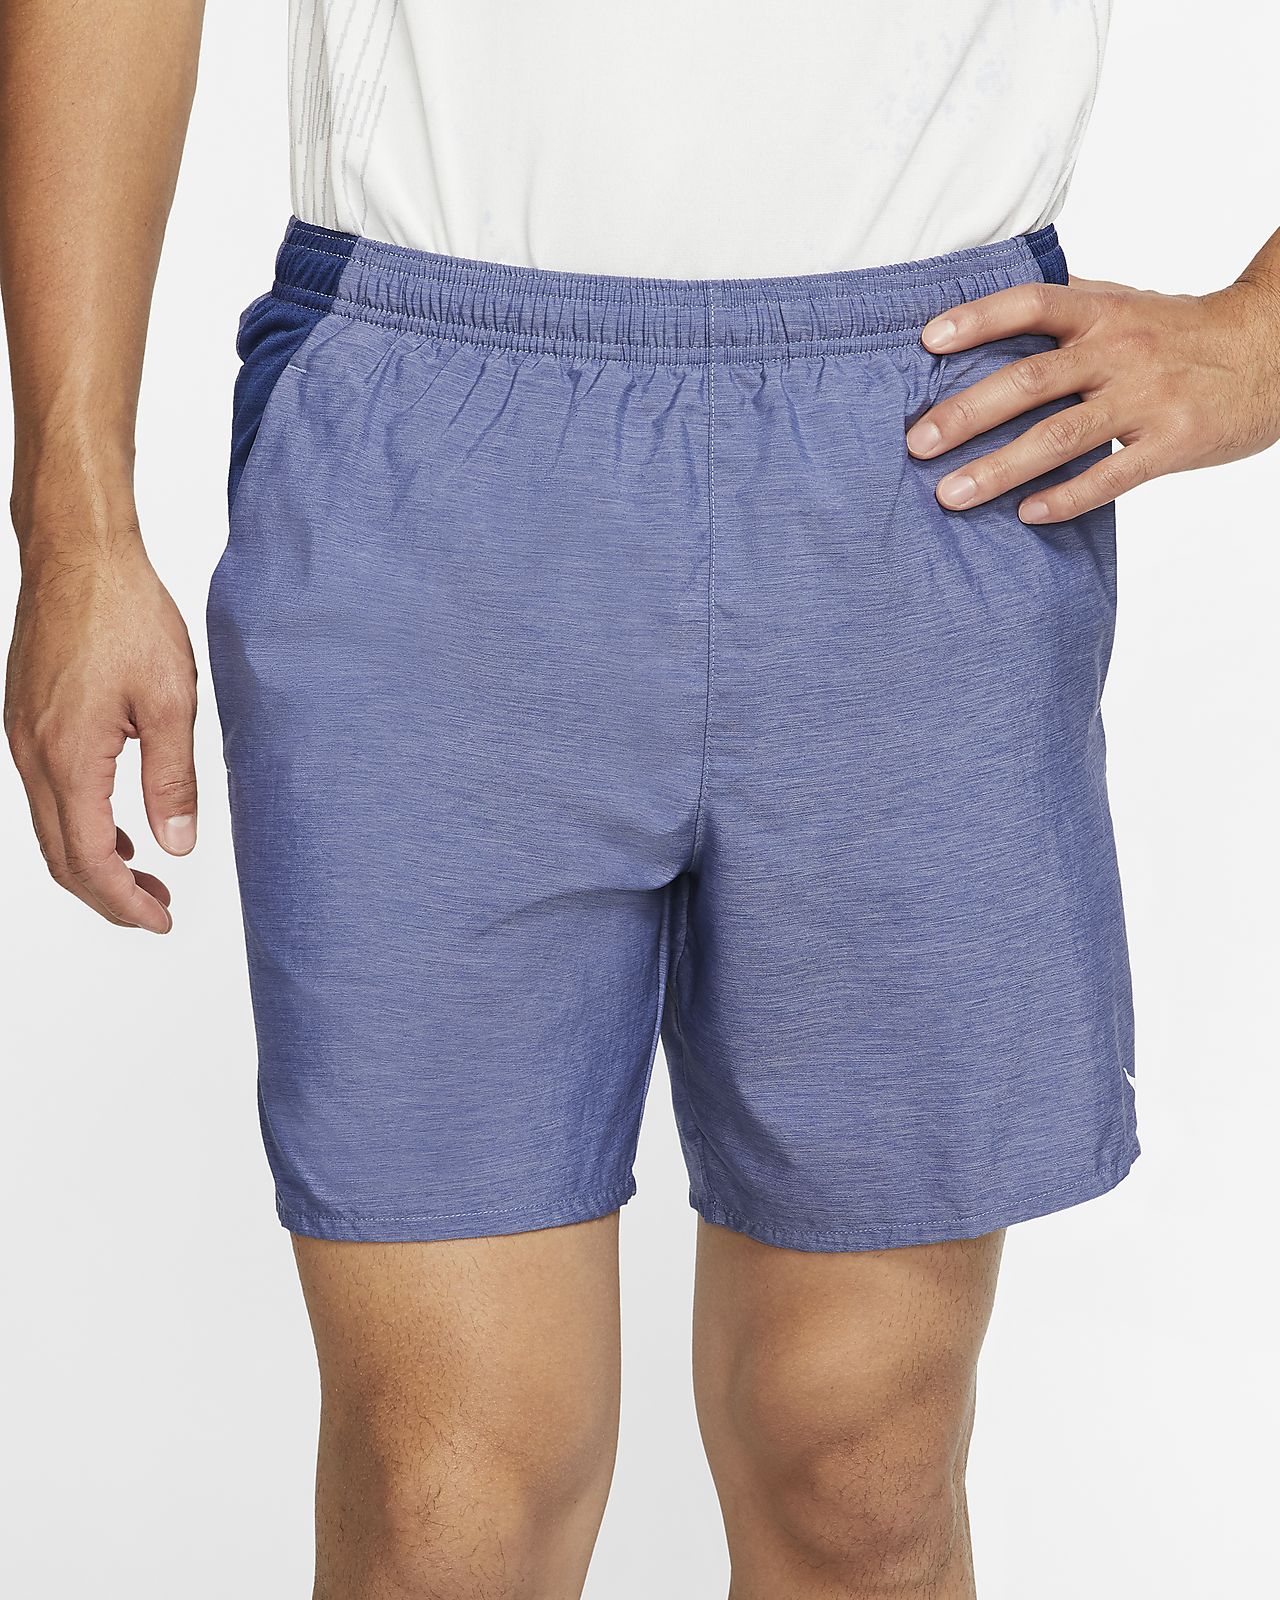 navy blue nike shorts mens